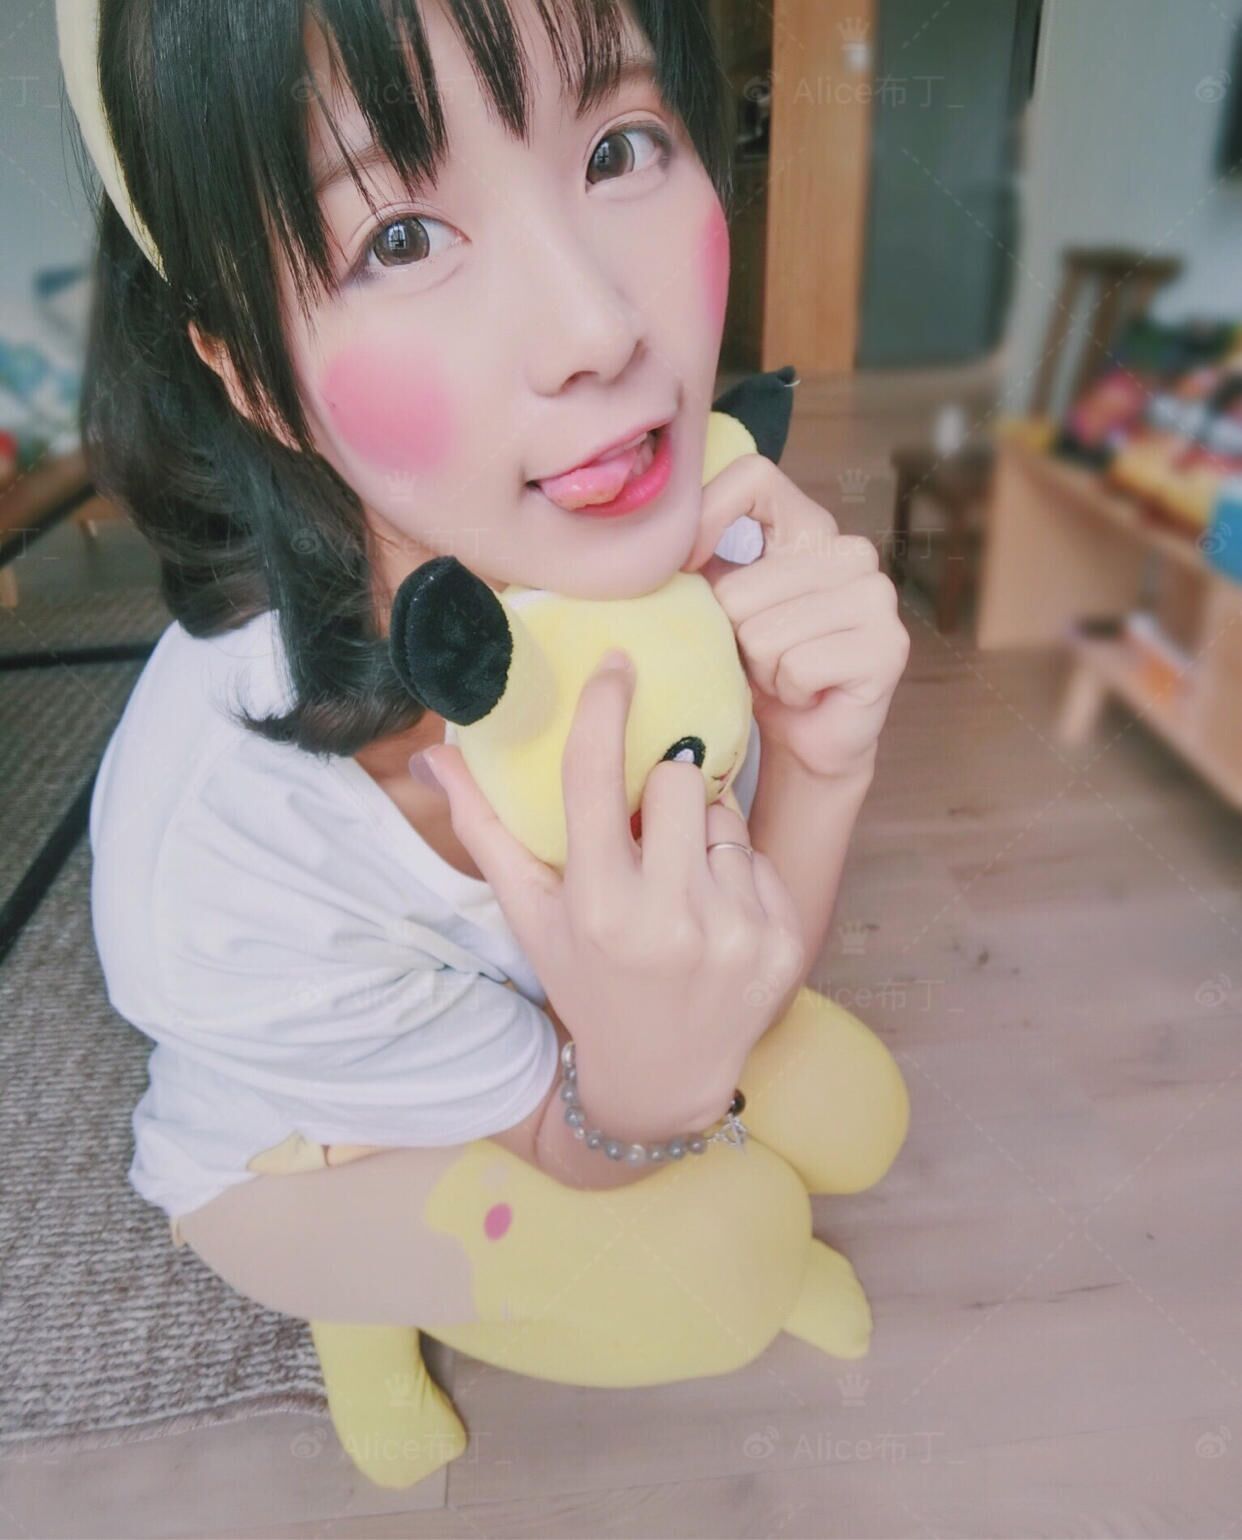 Cute Half Naked Chinese Pikachu Girl Slender Petite Breasts Hot Sexy Girl